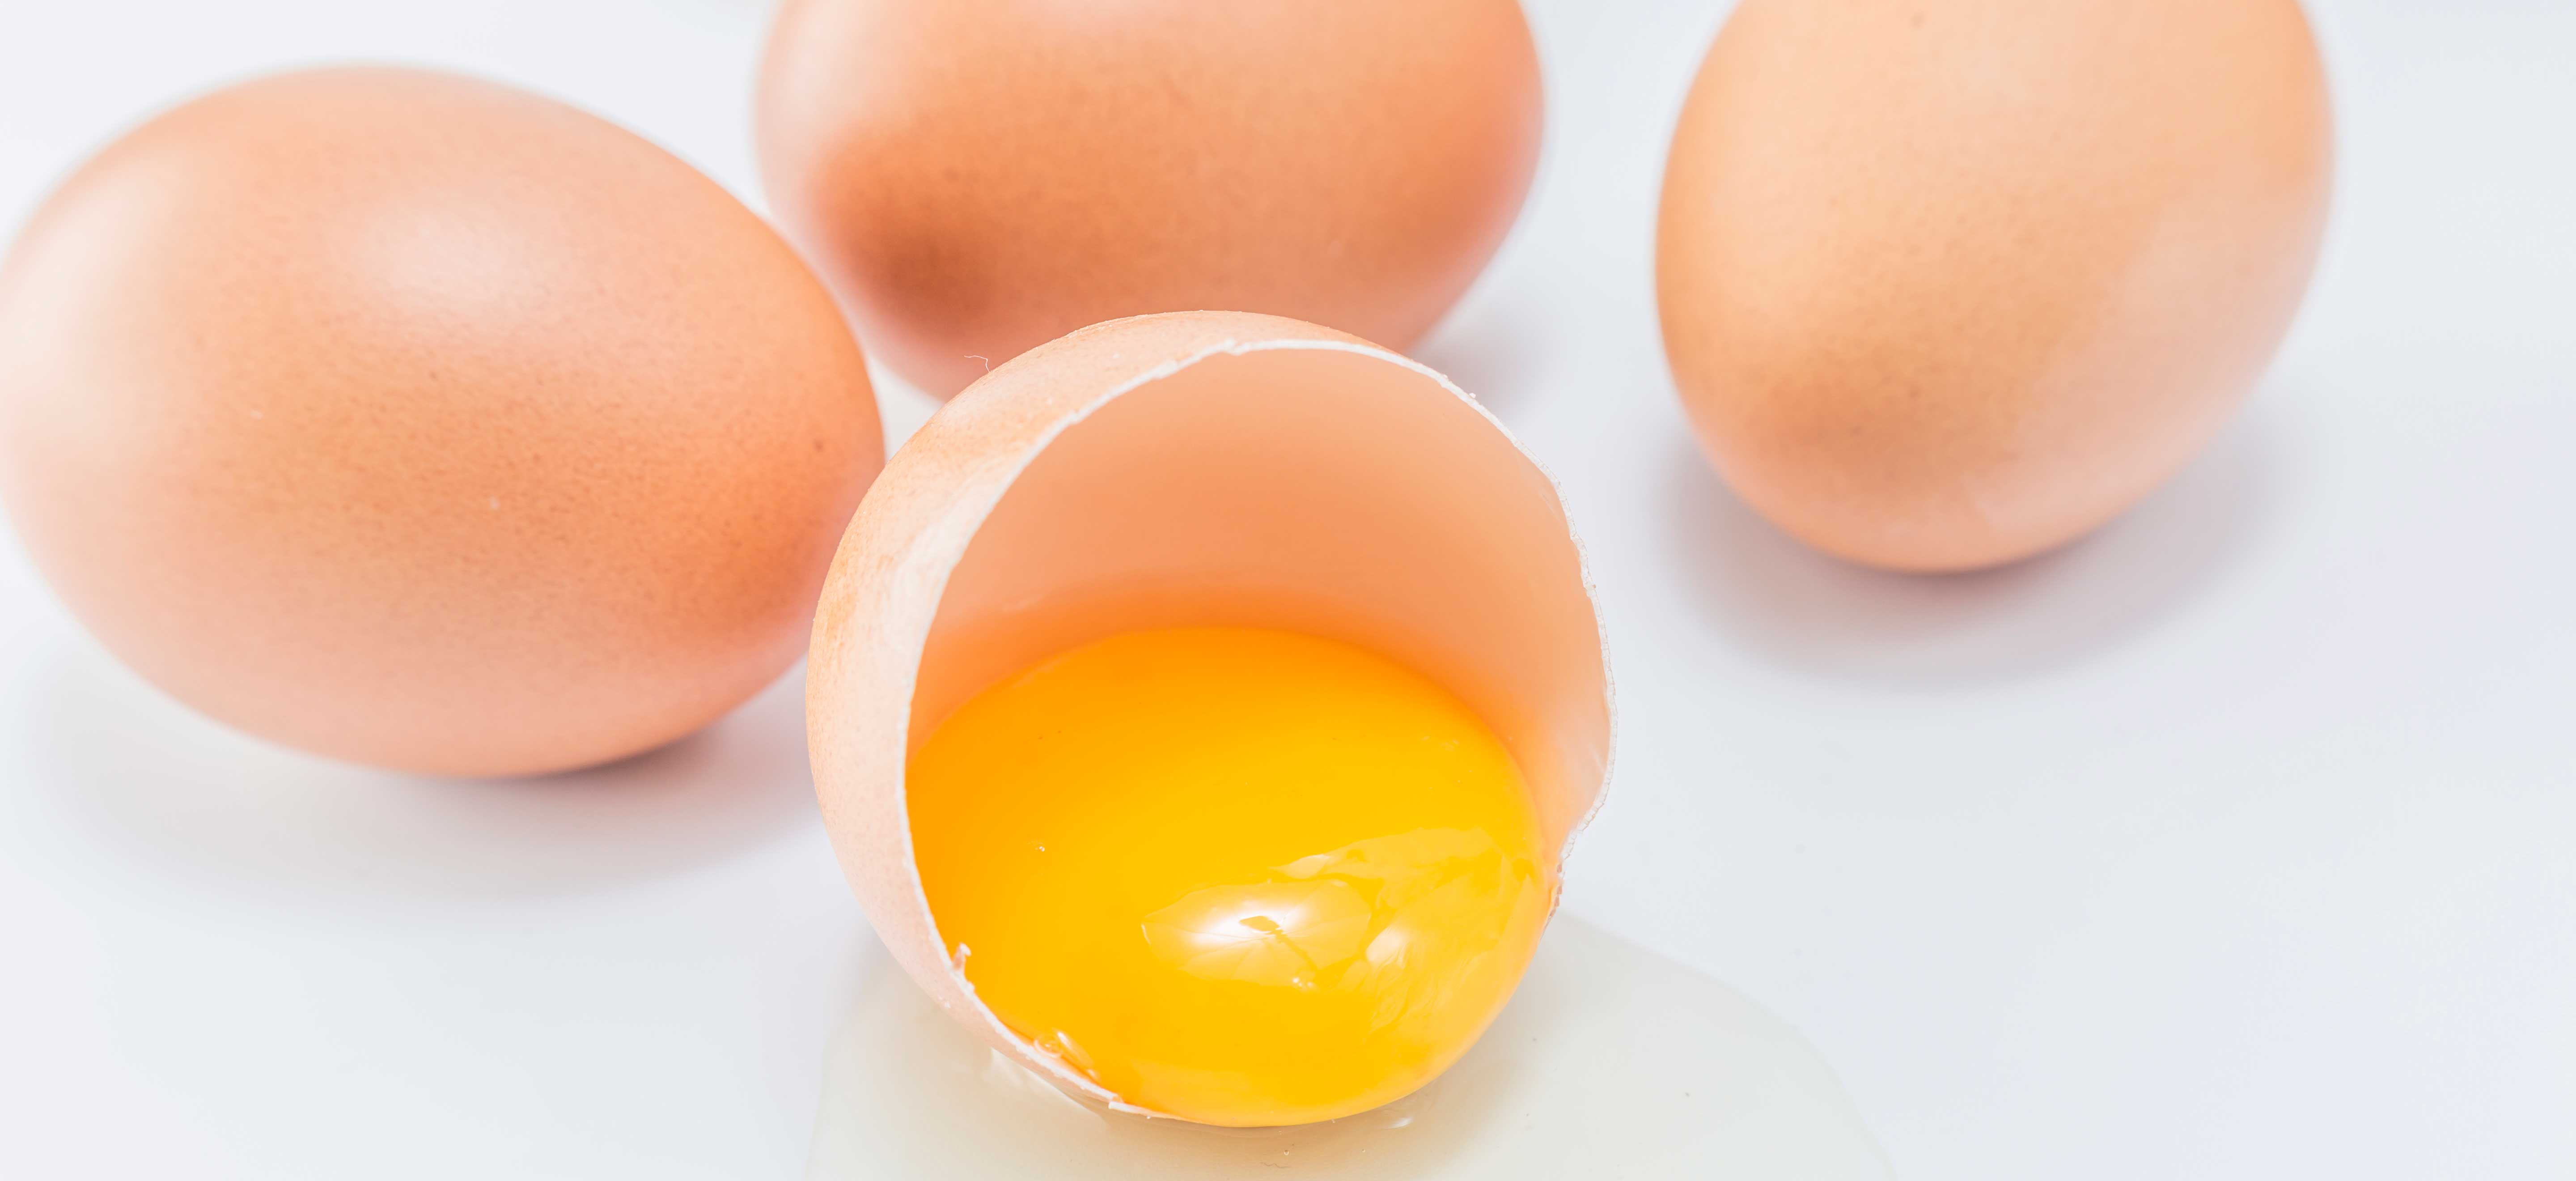 Kippenei-eiwit gemaakt dat niet afkomstig is van kip